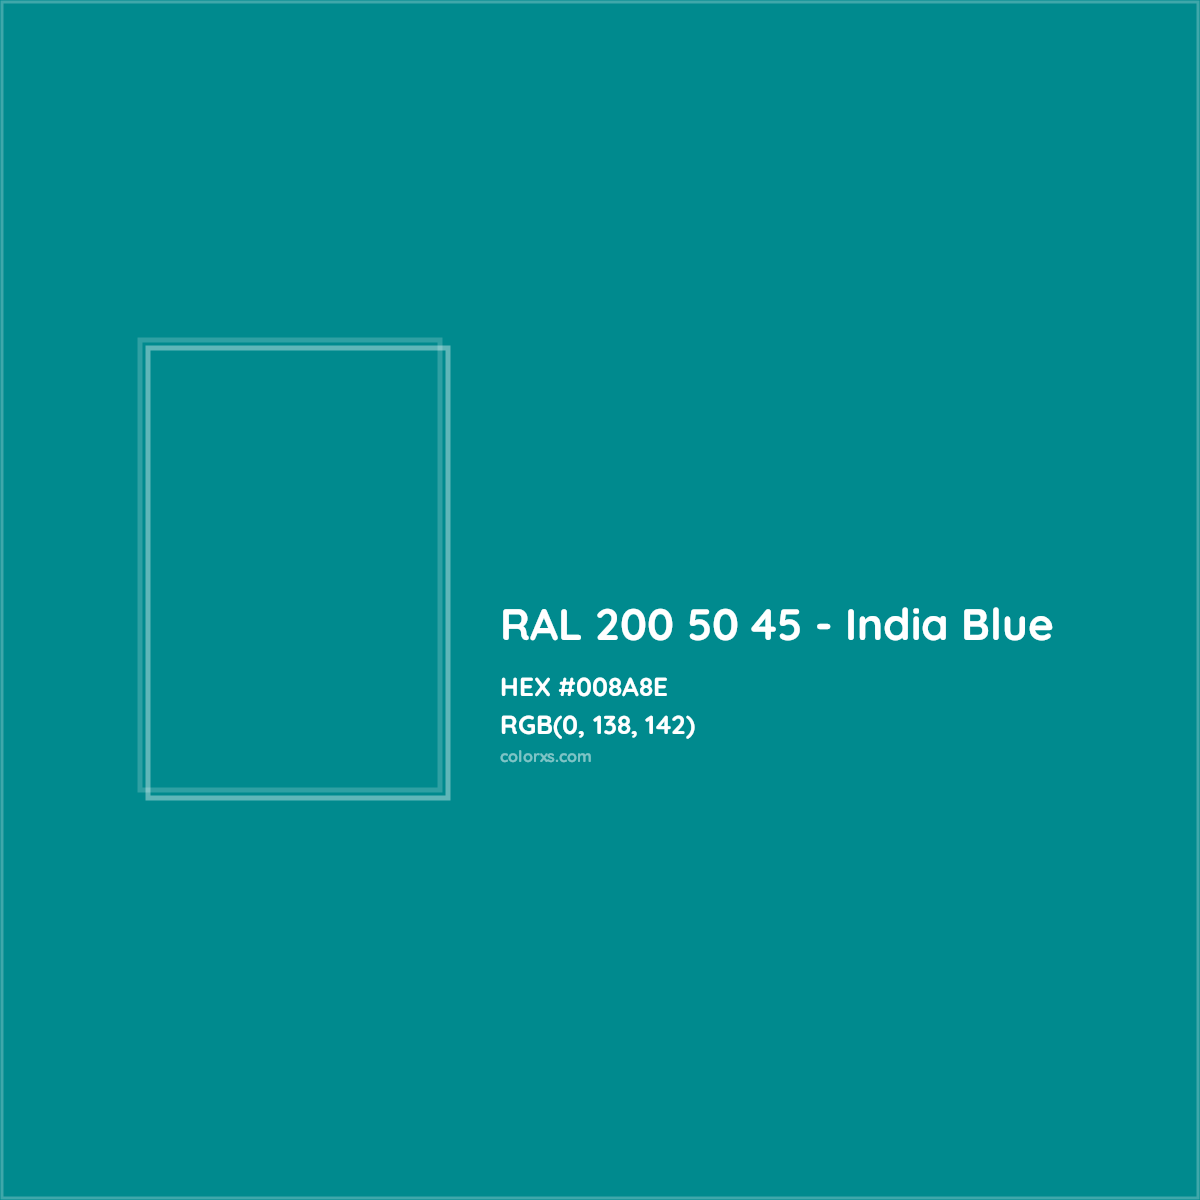 HEX #008A8E RAL 200 50 45 - India Blue CMS RAL Design - Color Code